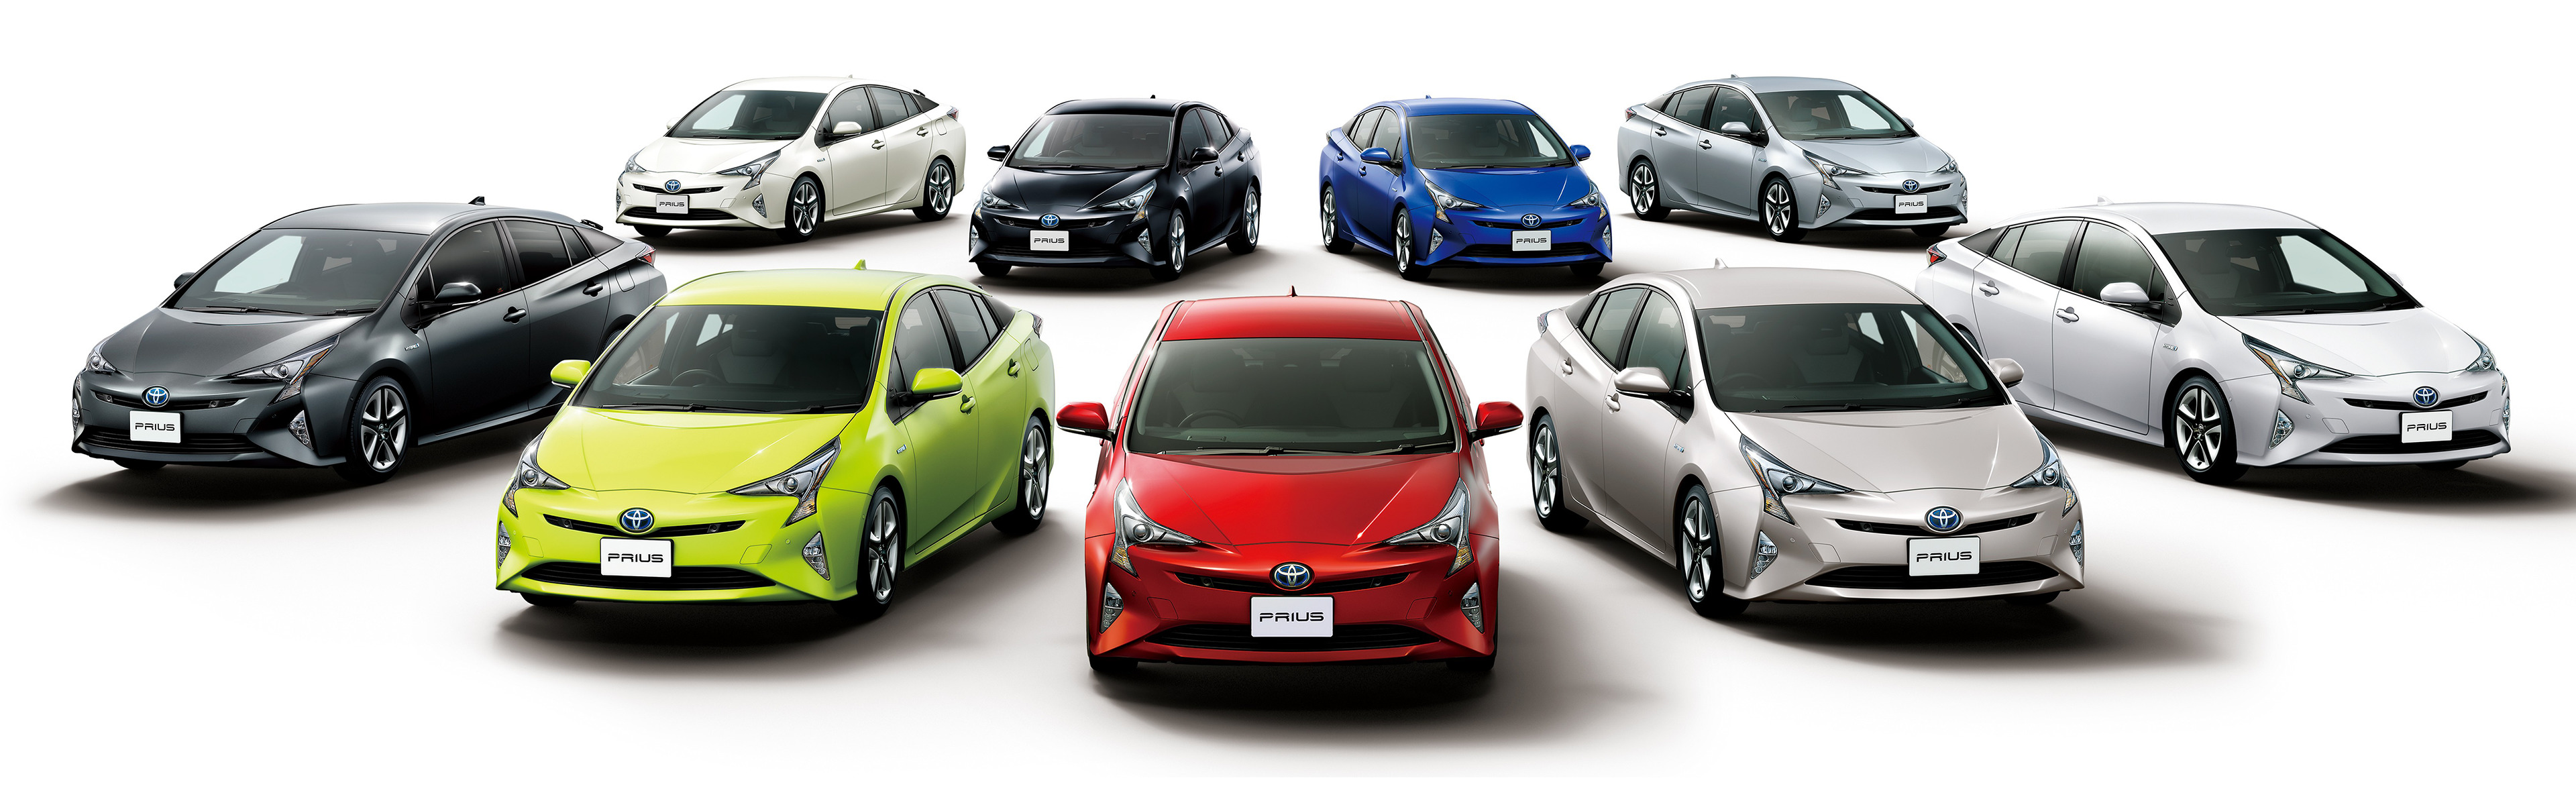 Toyota Prius, Car, Vehicle, Electric Car, Dual Monitors, Multiple Display, Simple Background Wallpaper